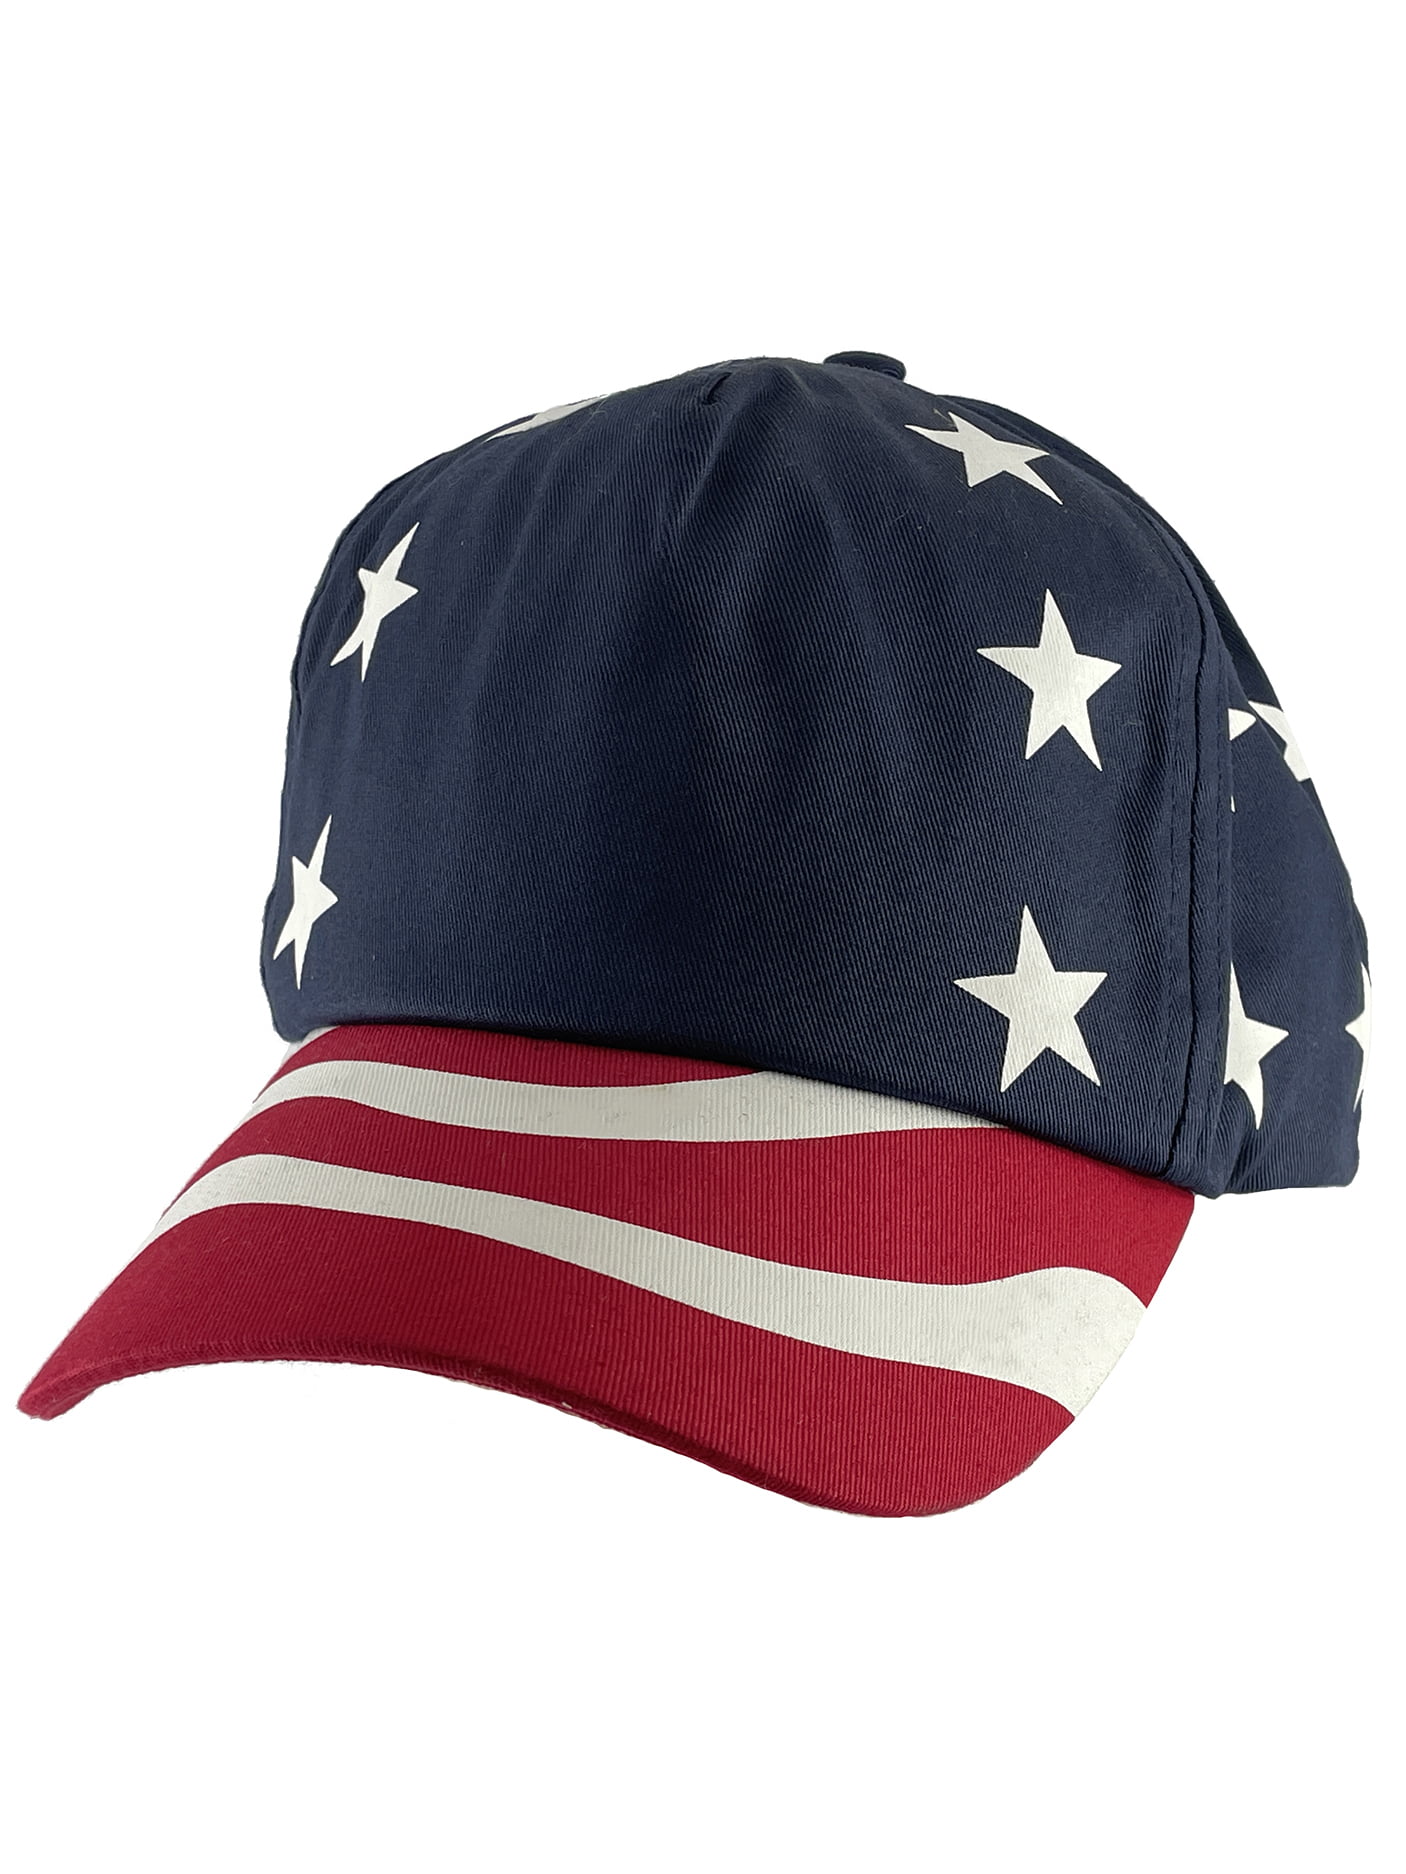 TEAM USA Hat FULL FLAGS Flexfit Cap Red White Navy OSFA NEW Stars Stripes $20 